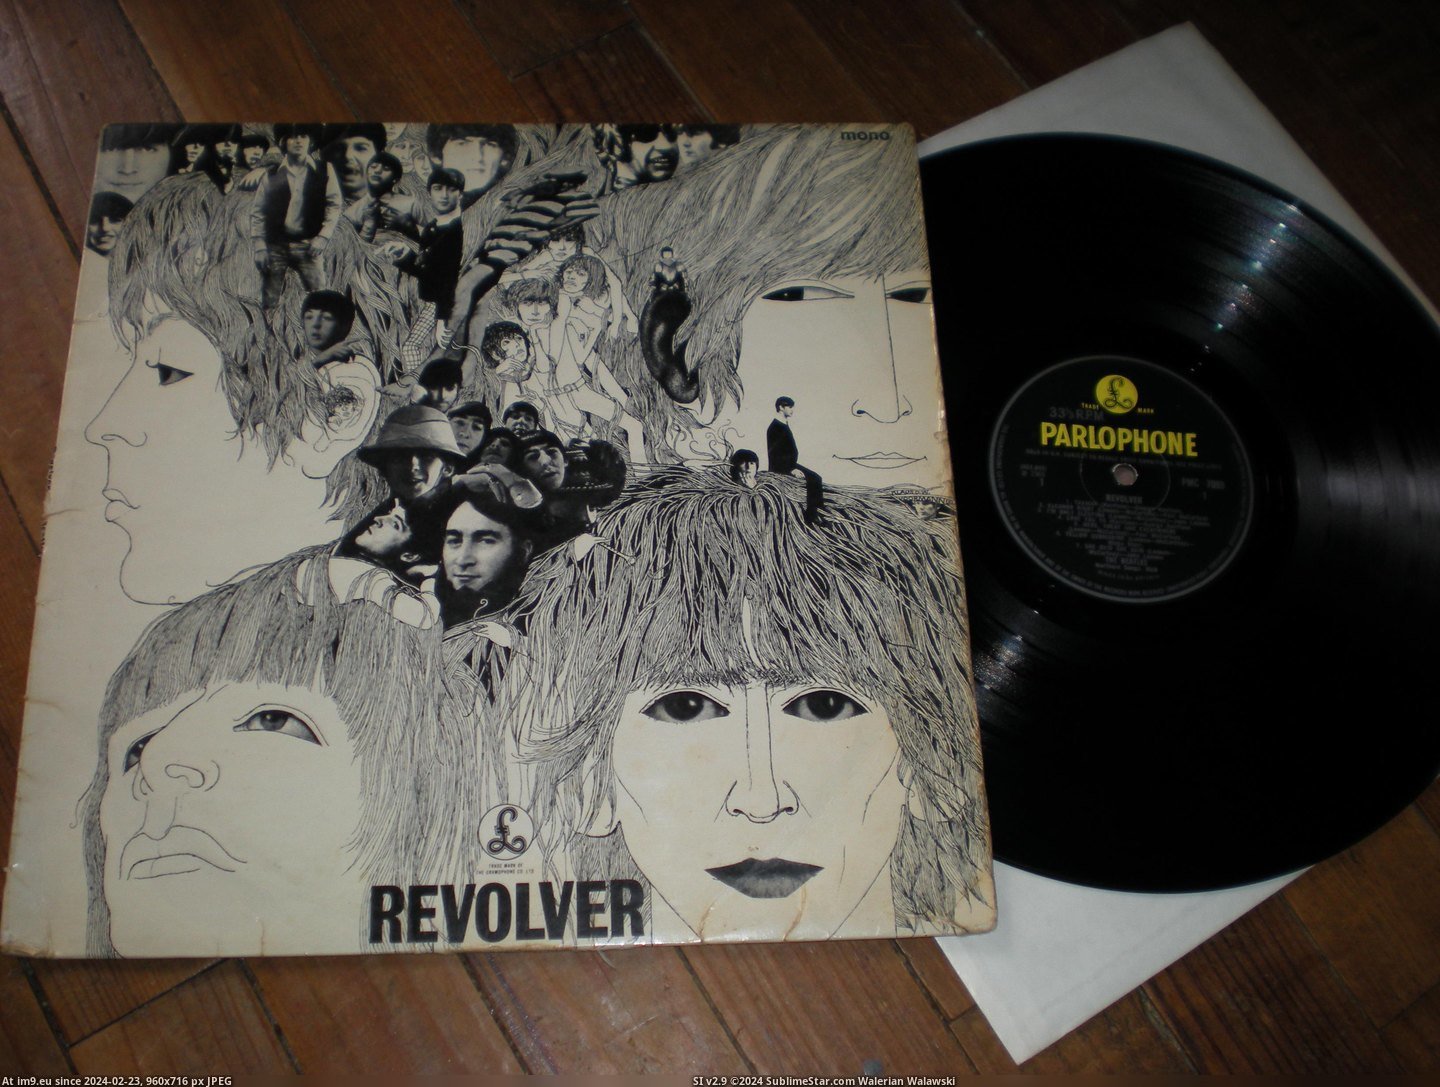  #Revolver  Revolver -2-3 5 Pic. (Изображение из альбом new 1))